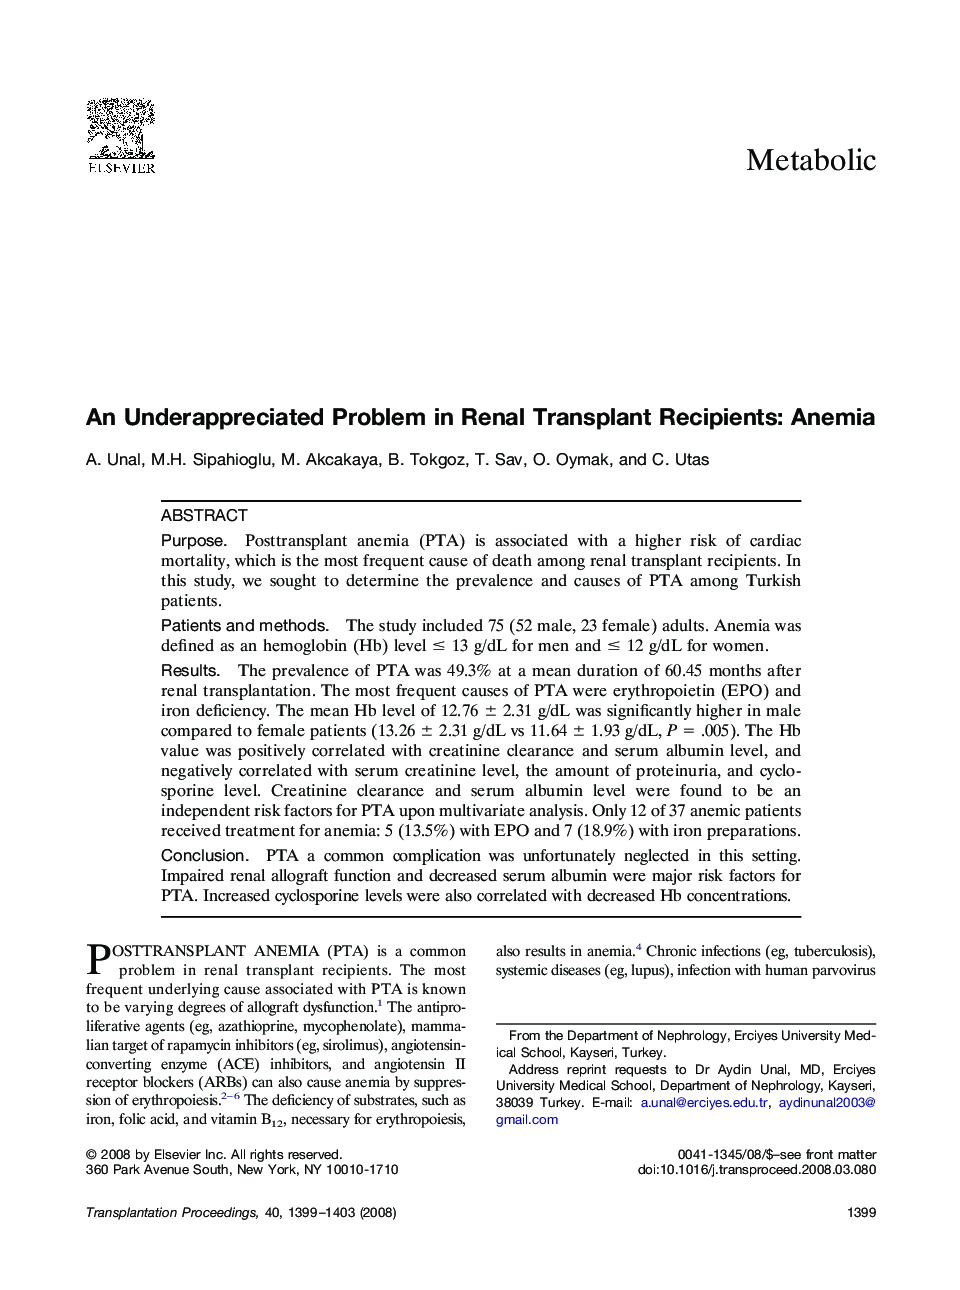 An Underappreciated Problem in Renal Transplant Recipients: Anemia